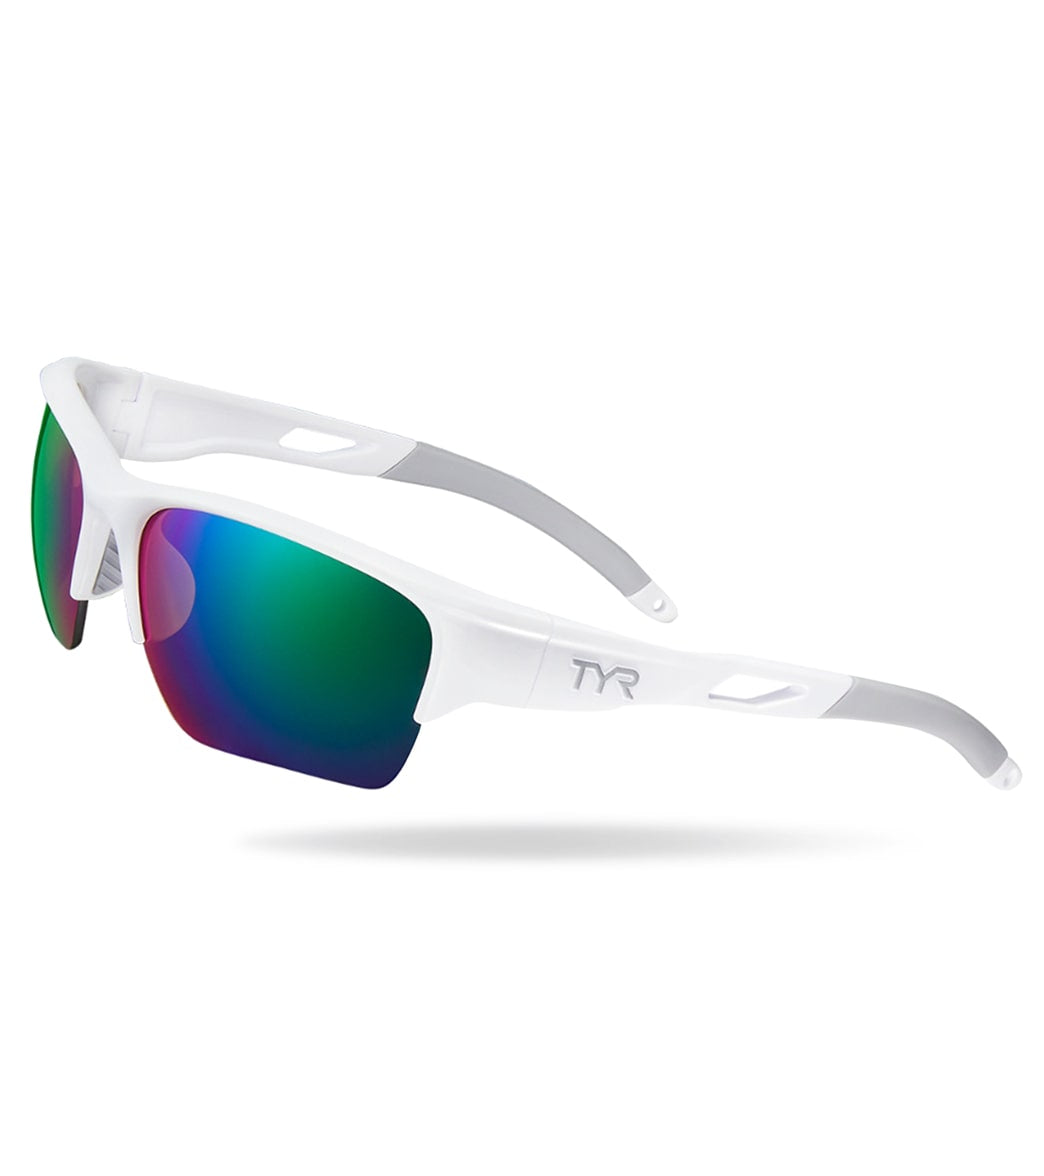 TYR Unisex Vatcher Performance Sunglasses